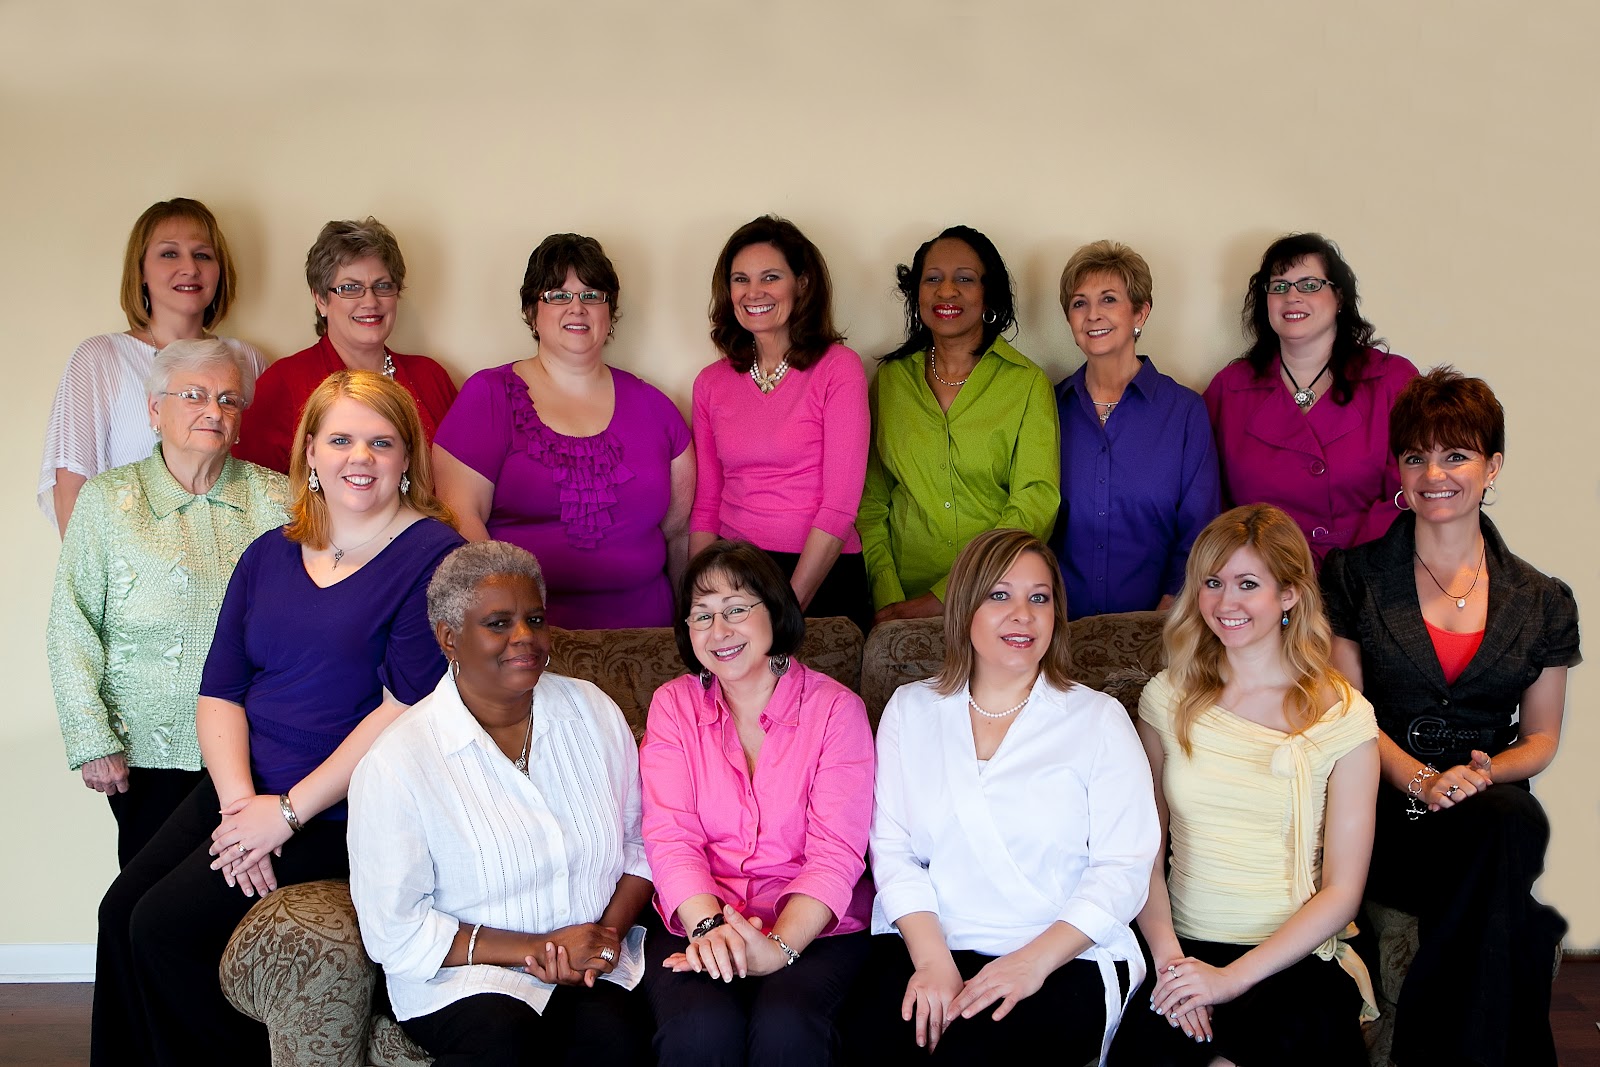 Women's Resource Center - Mobile: Meet the Staff